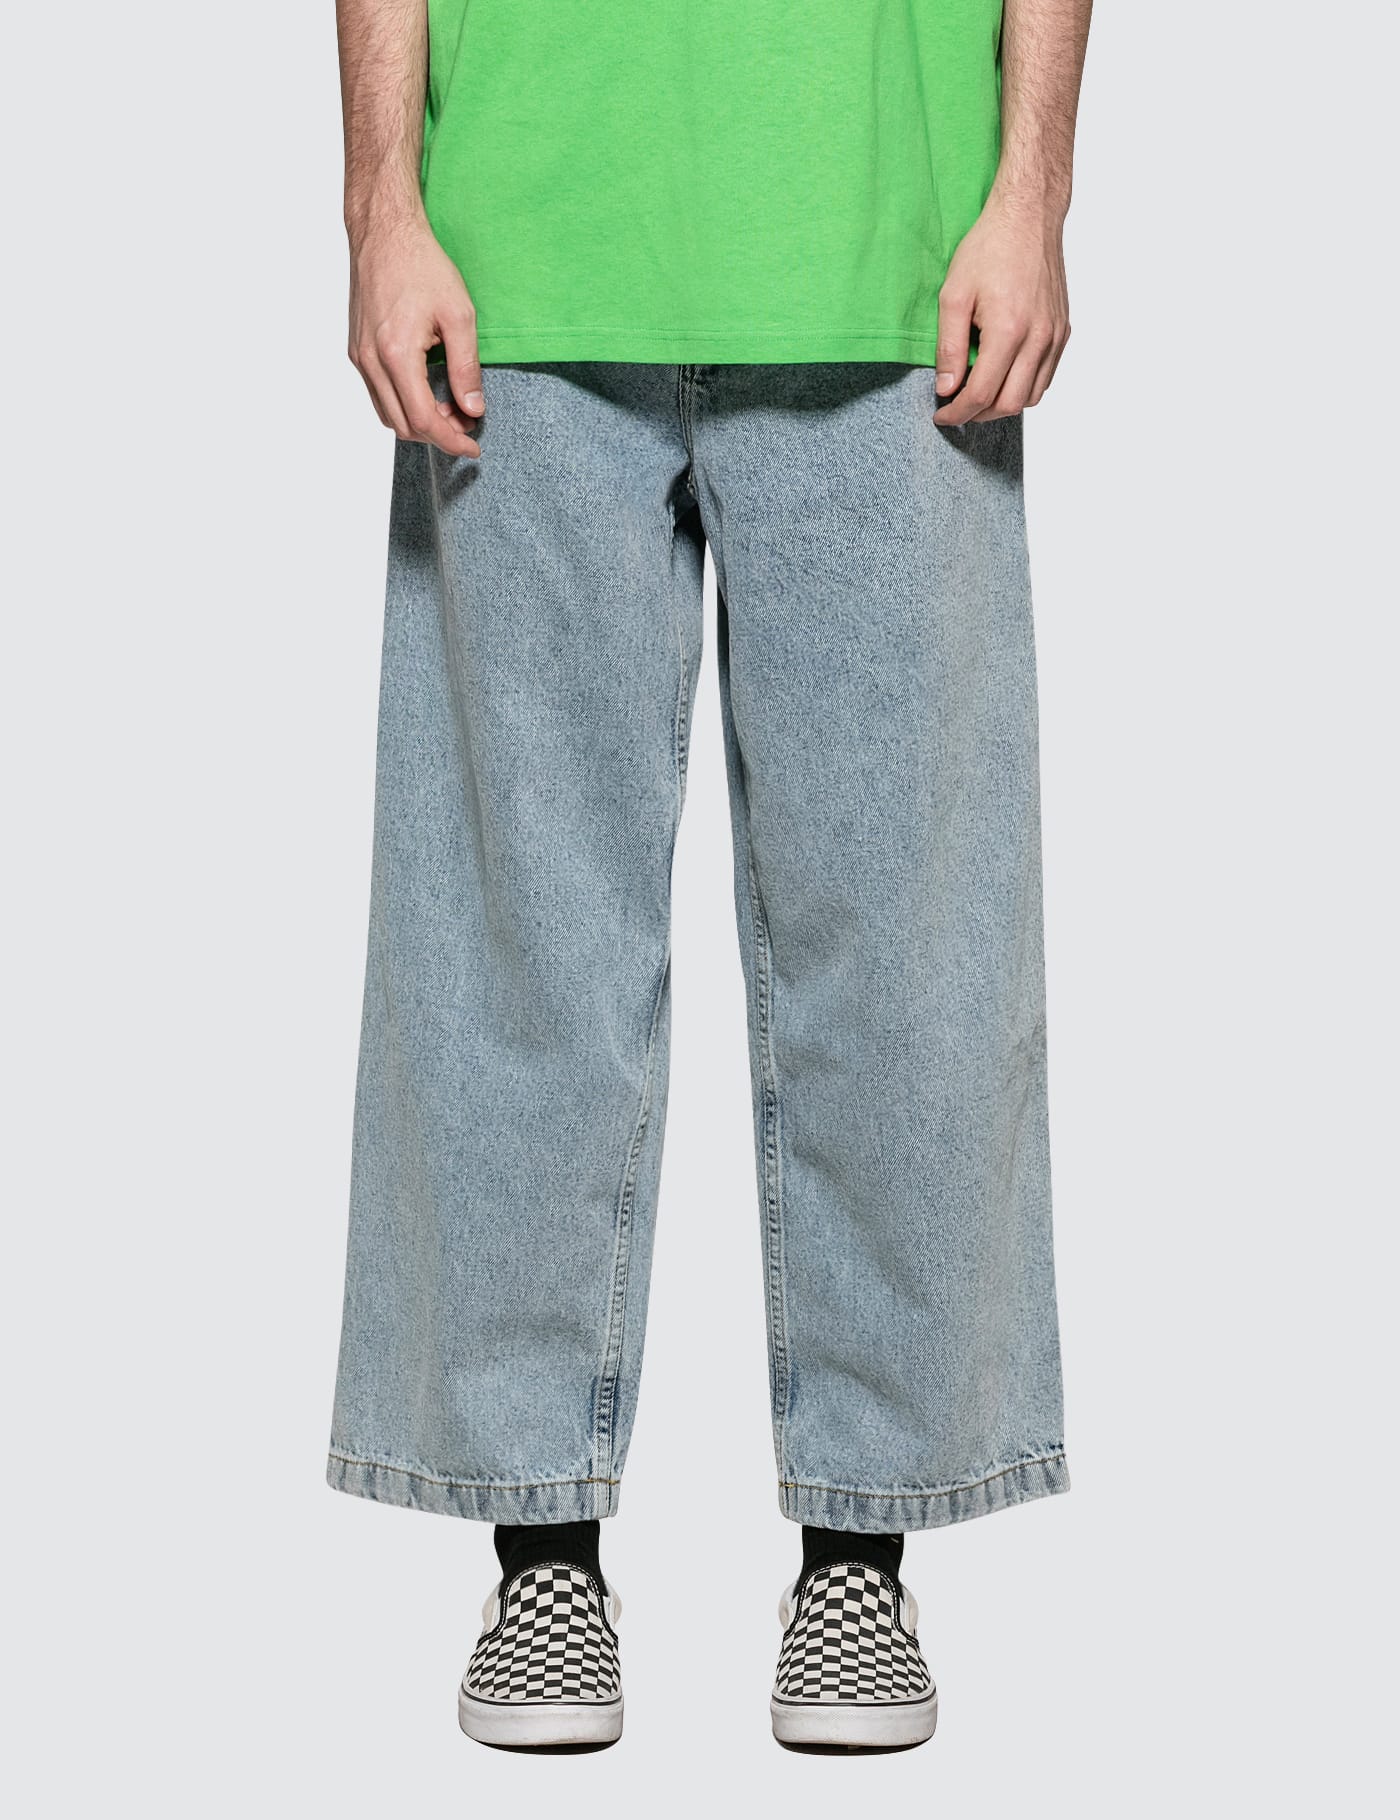 Polar Skate Co. - Big Boy Jeans | HBX - Globally Curated Fashion 